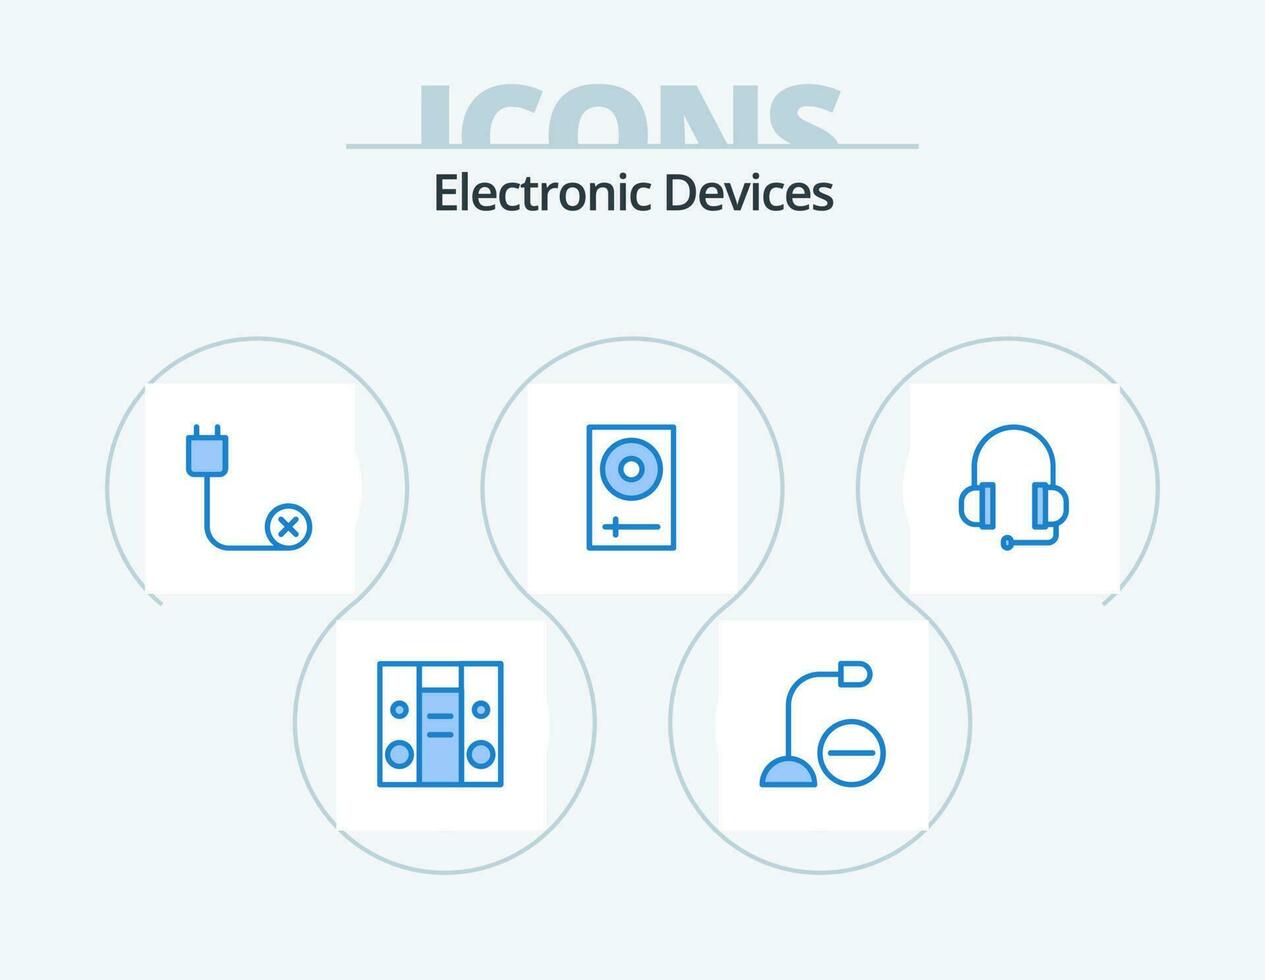 dispositivi blu icona imballare 5 icona design. miscelatore. dj. computer. dispositivi. hardware vettore